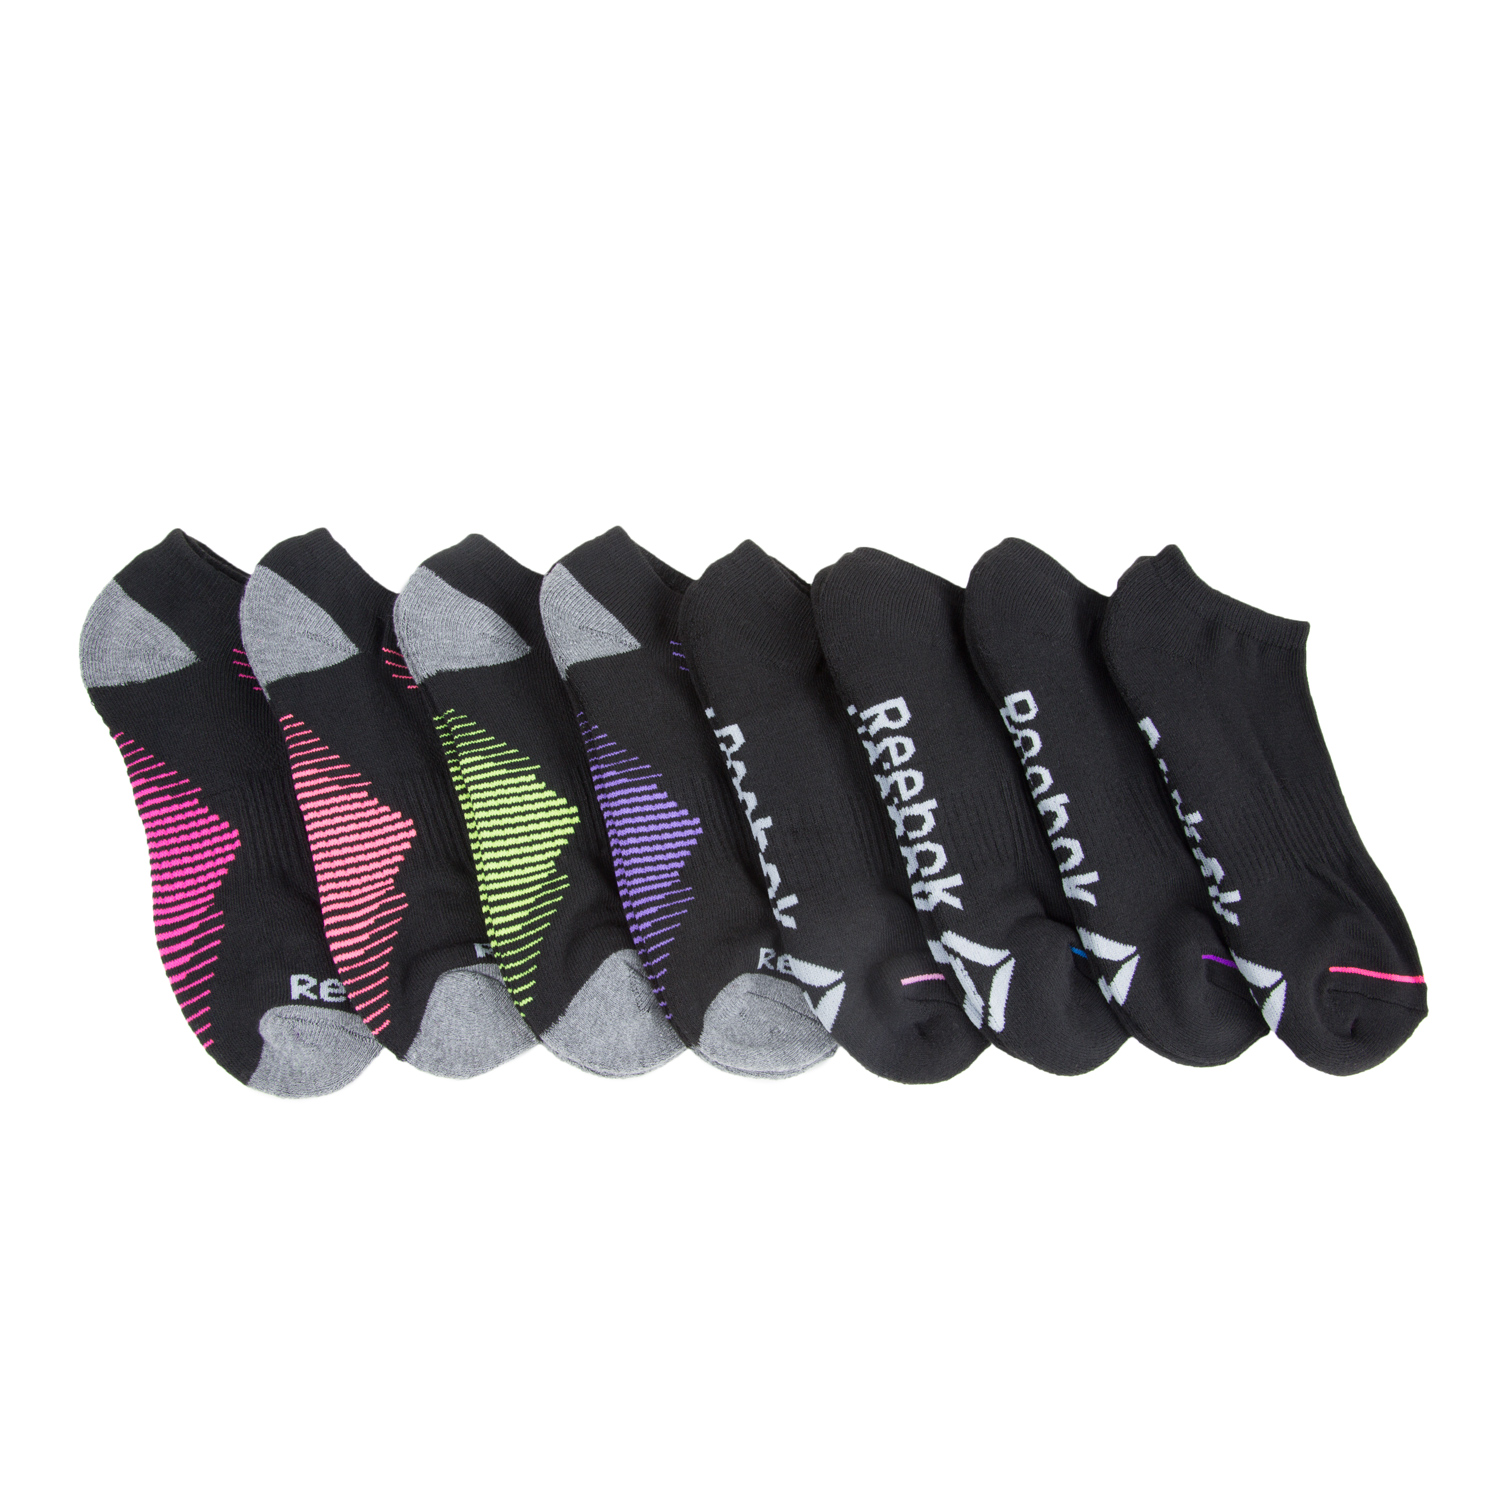 Visita lo Store di ReebokReebok Women's Low Cut Socks Pack of 10 Black/Multi, Size 9-11 